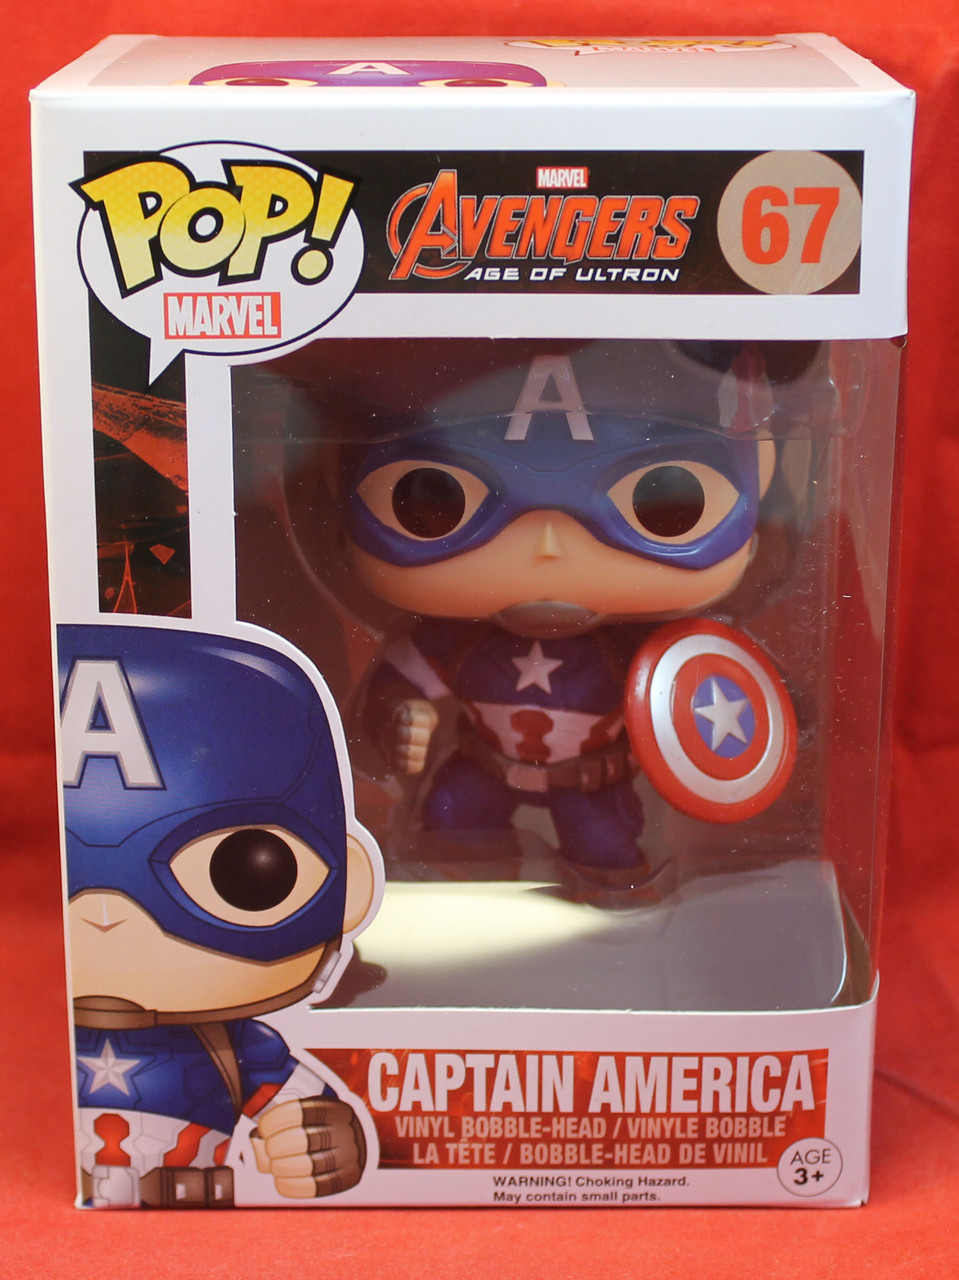 Marvel Pop! Vinyl Figure Avengers Age Ultron - 67 Captain America